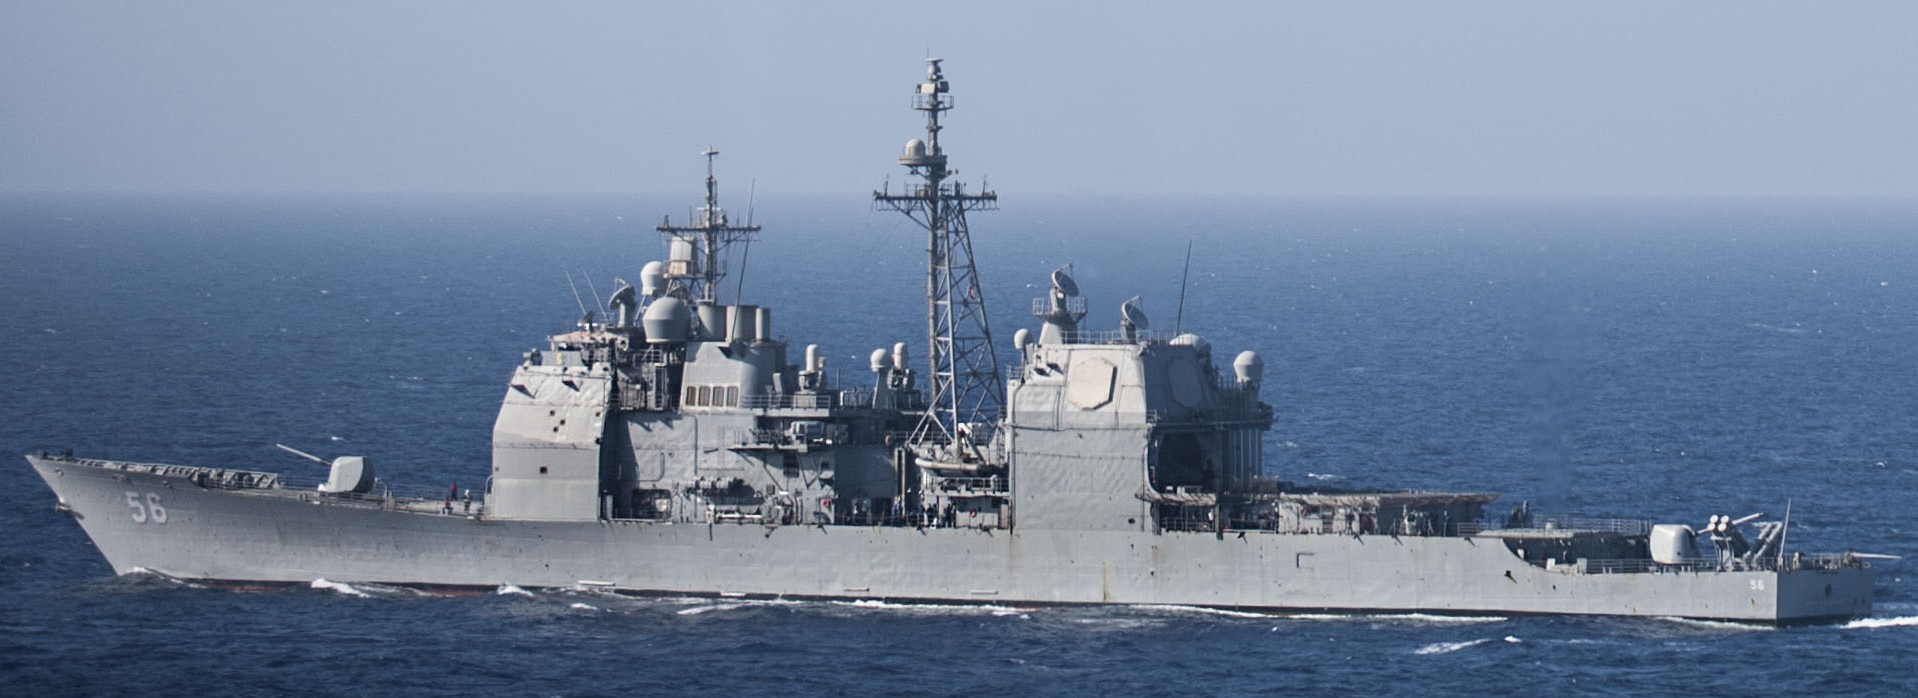 cg-56 uss san jacinto ticonderoga class guided missile cruiser aegis us navy 46